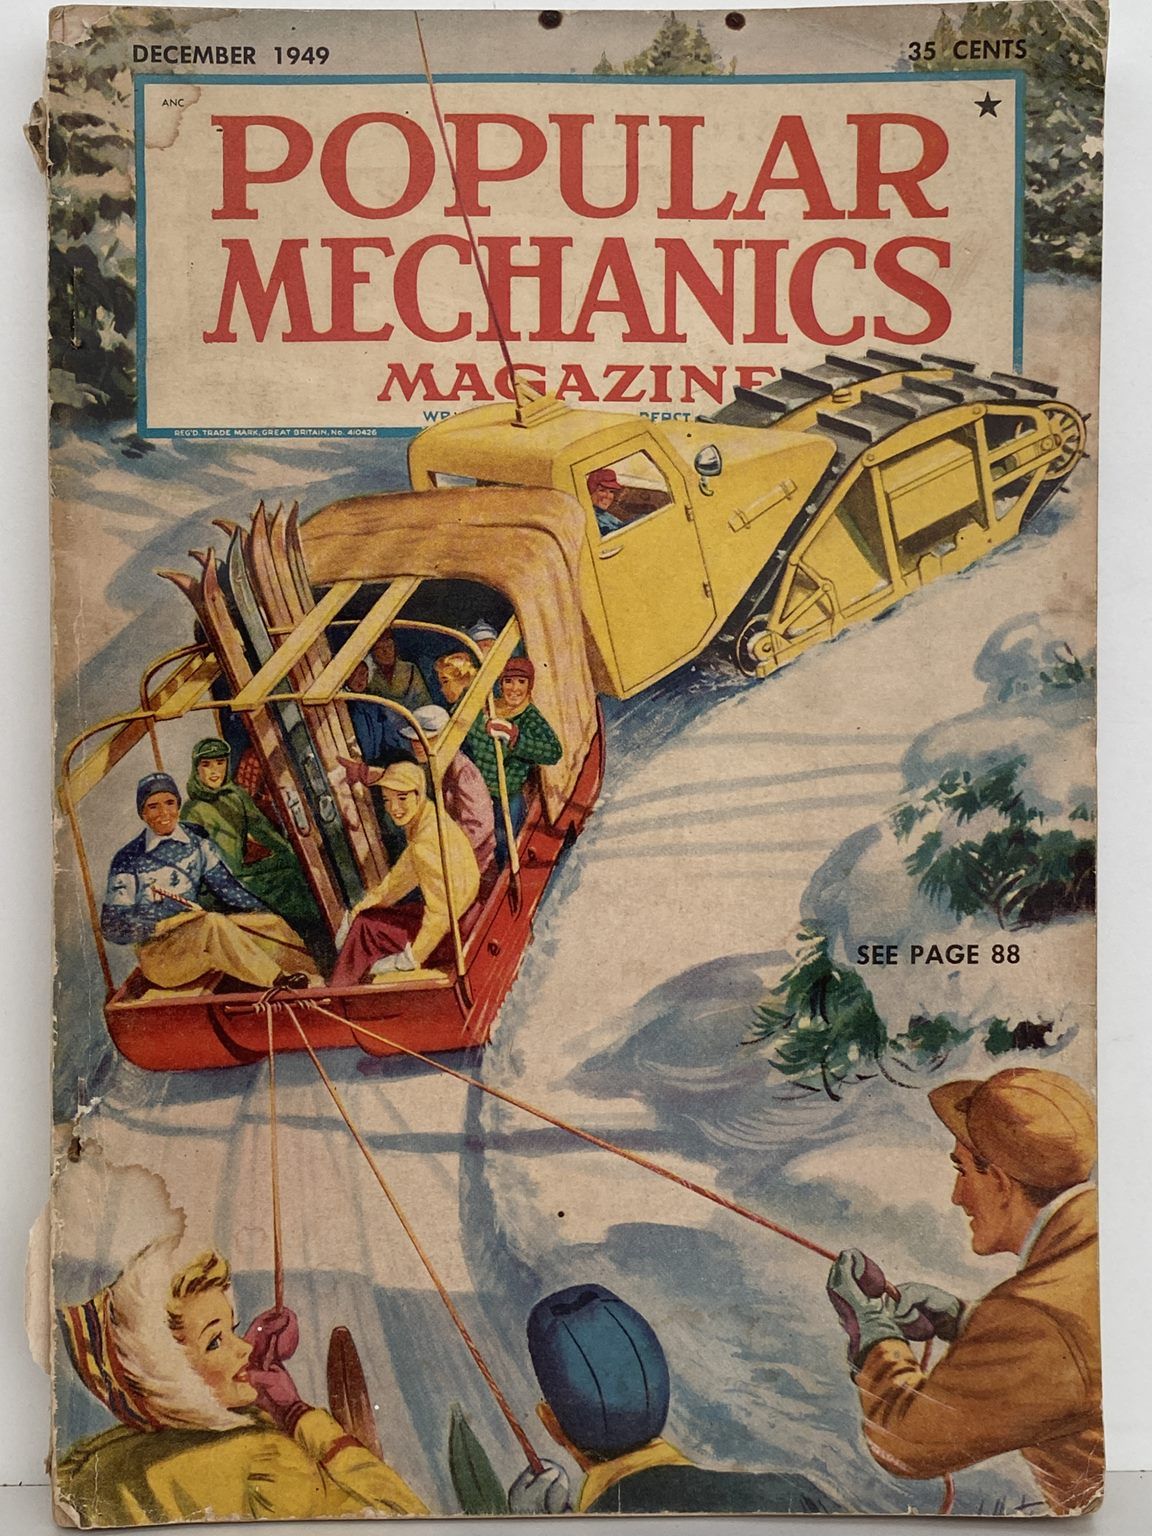 VINTAGE MAGAZINE: Popular Mechanics - Vol. 92, No. 6 - December 1949